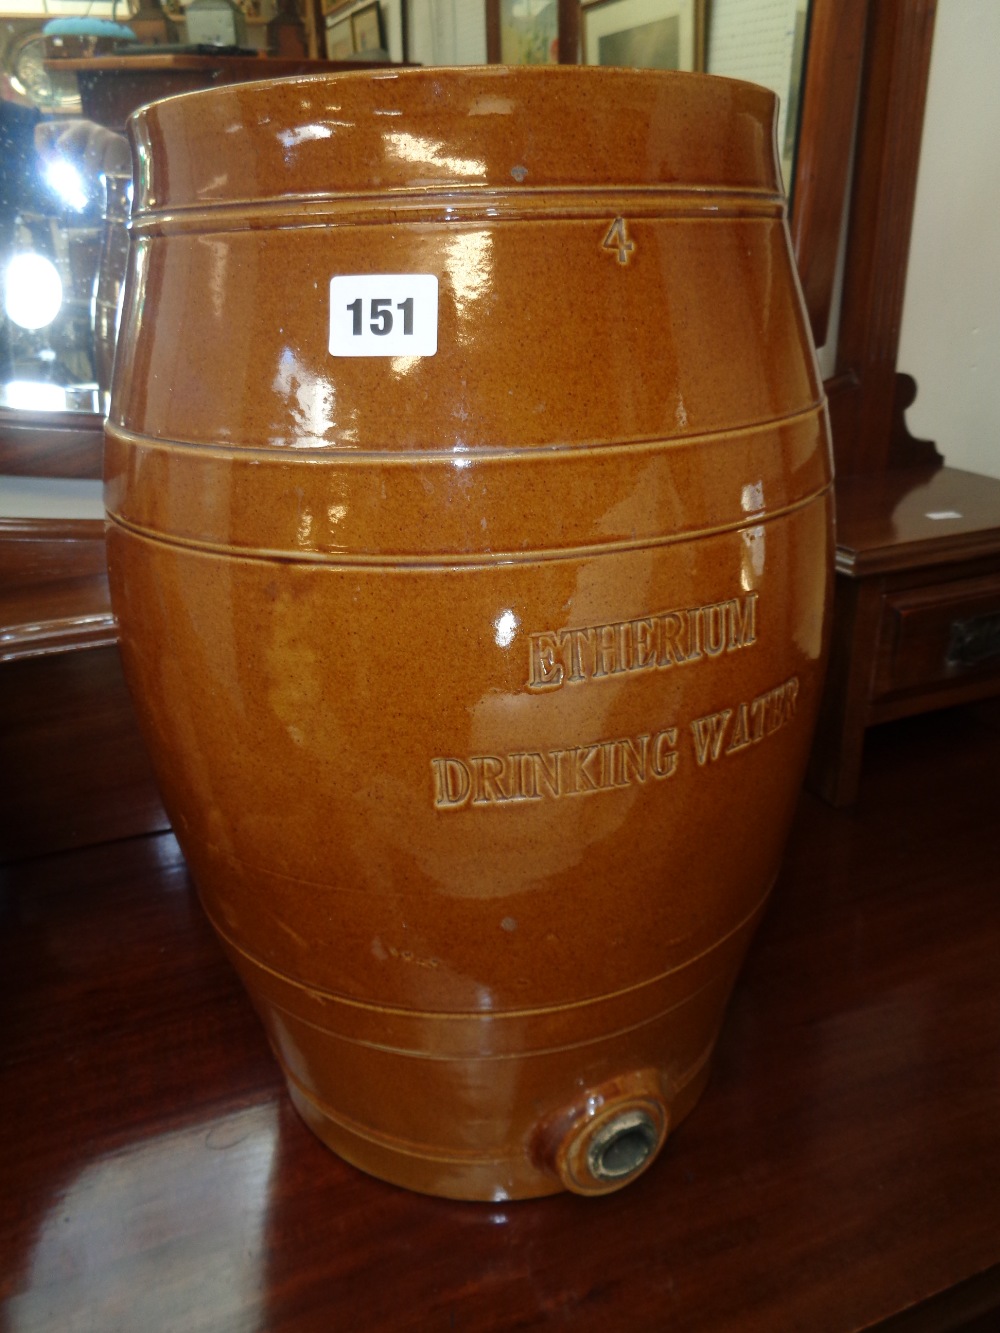 Etherium Drinking Water Glazed barrel